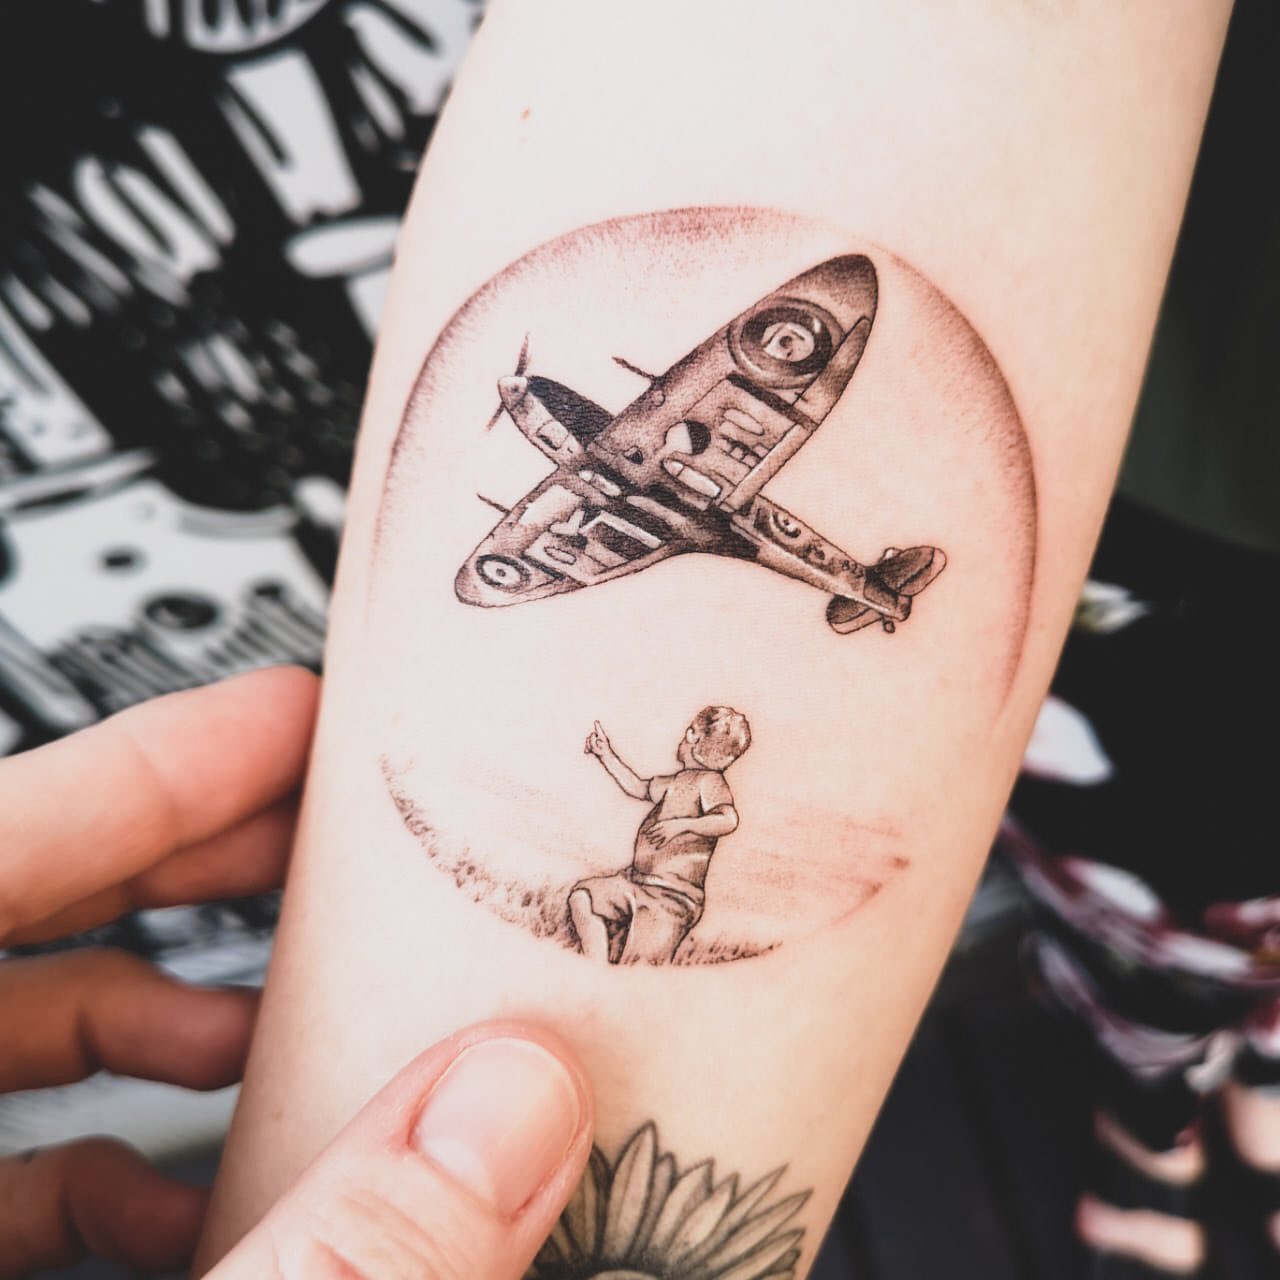 Tattoo uploaded by JenTheRipper • Plane tattoo by Emma Bundonis  #EmmaBundonis #blackandgrey #realistic #plane • Tattoodo